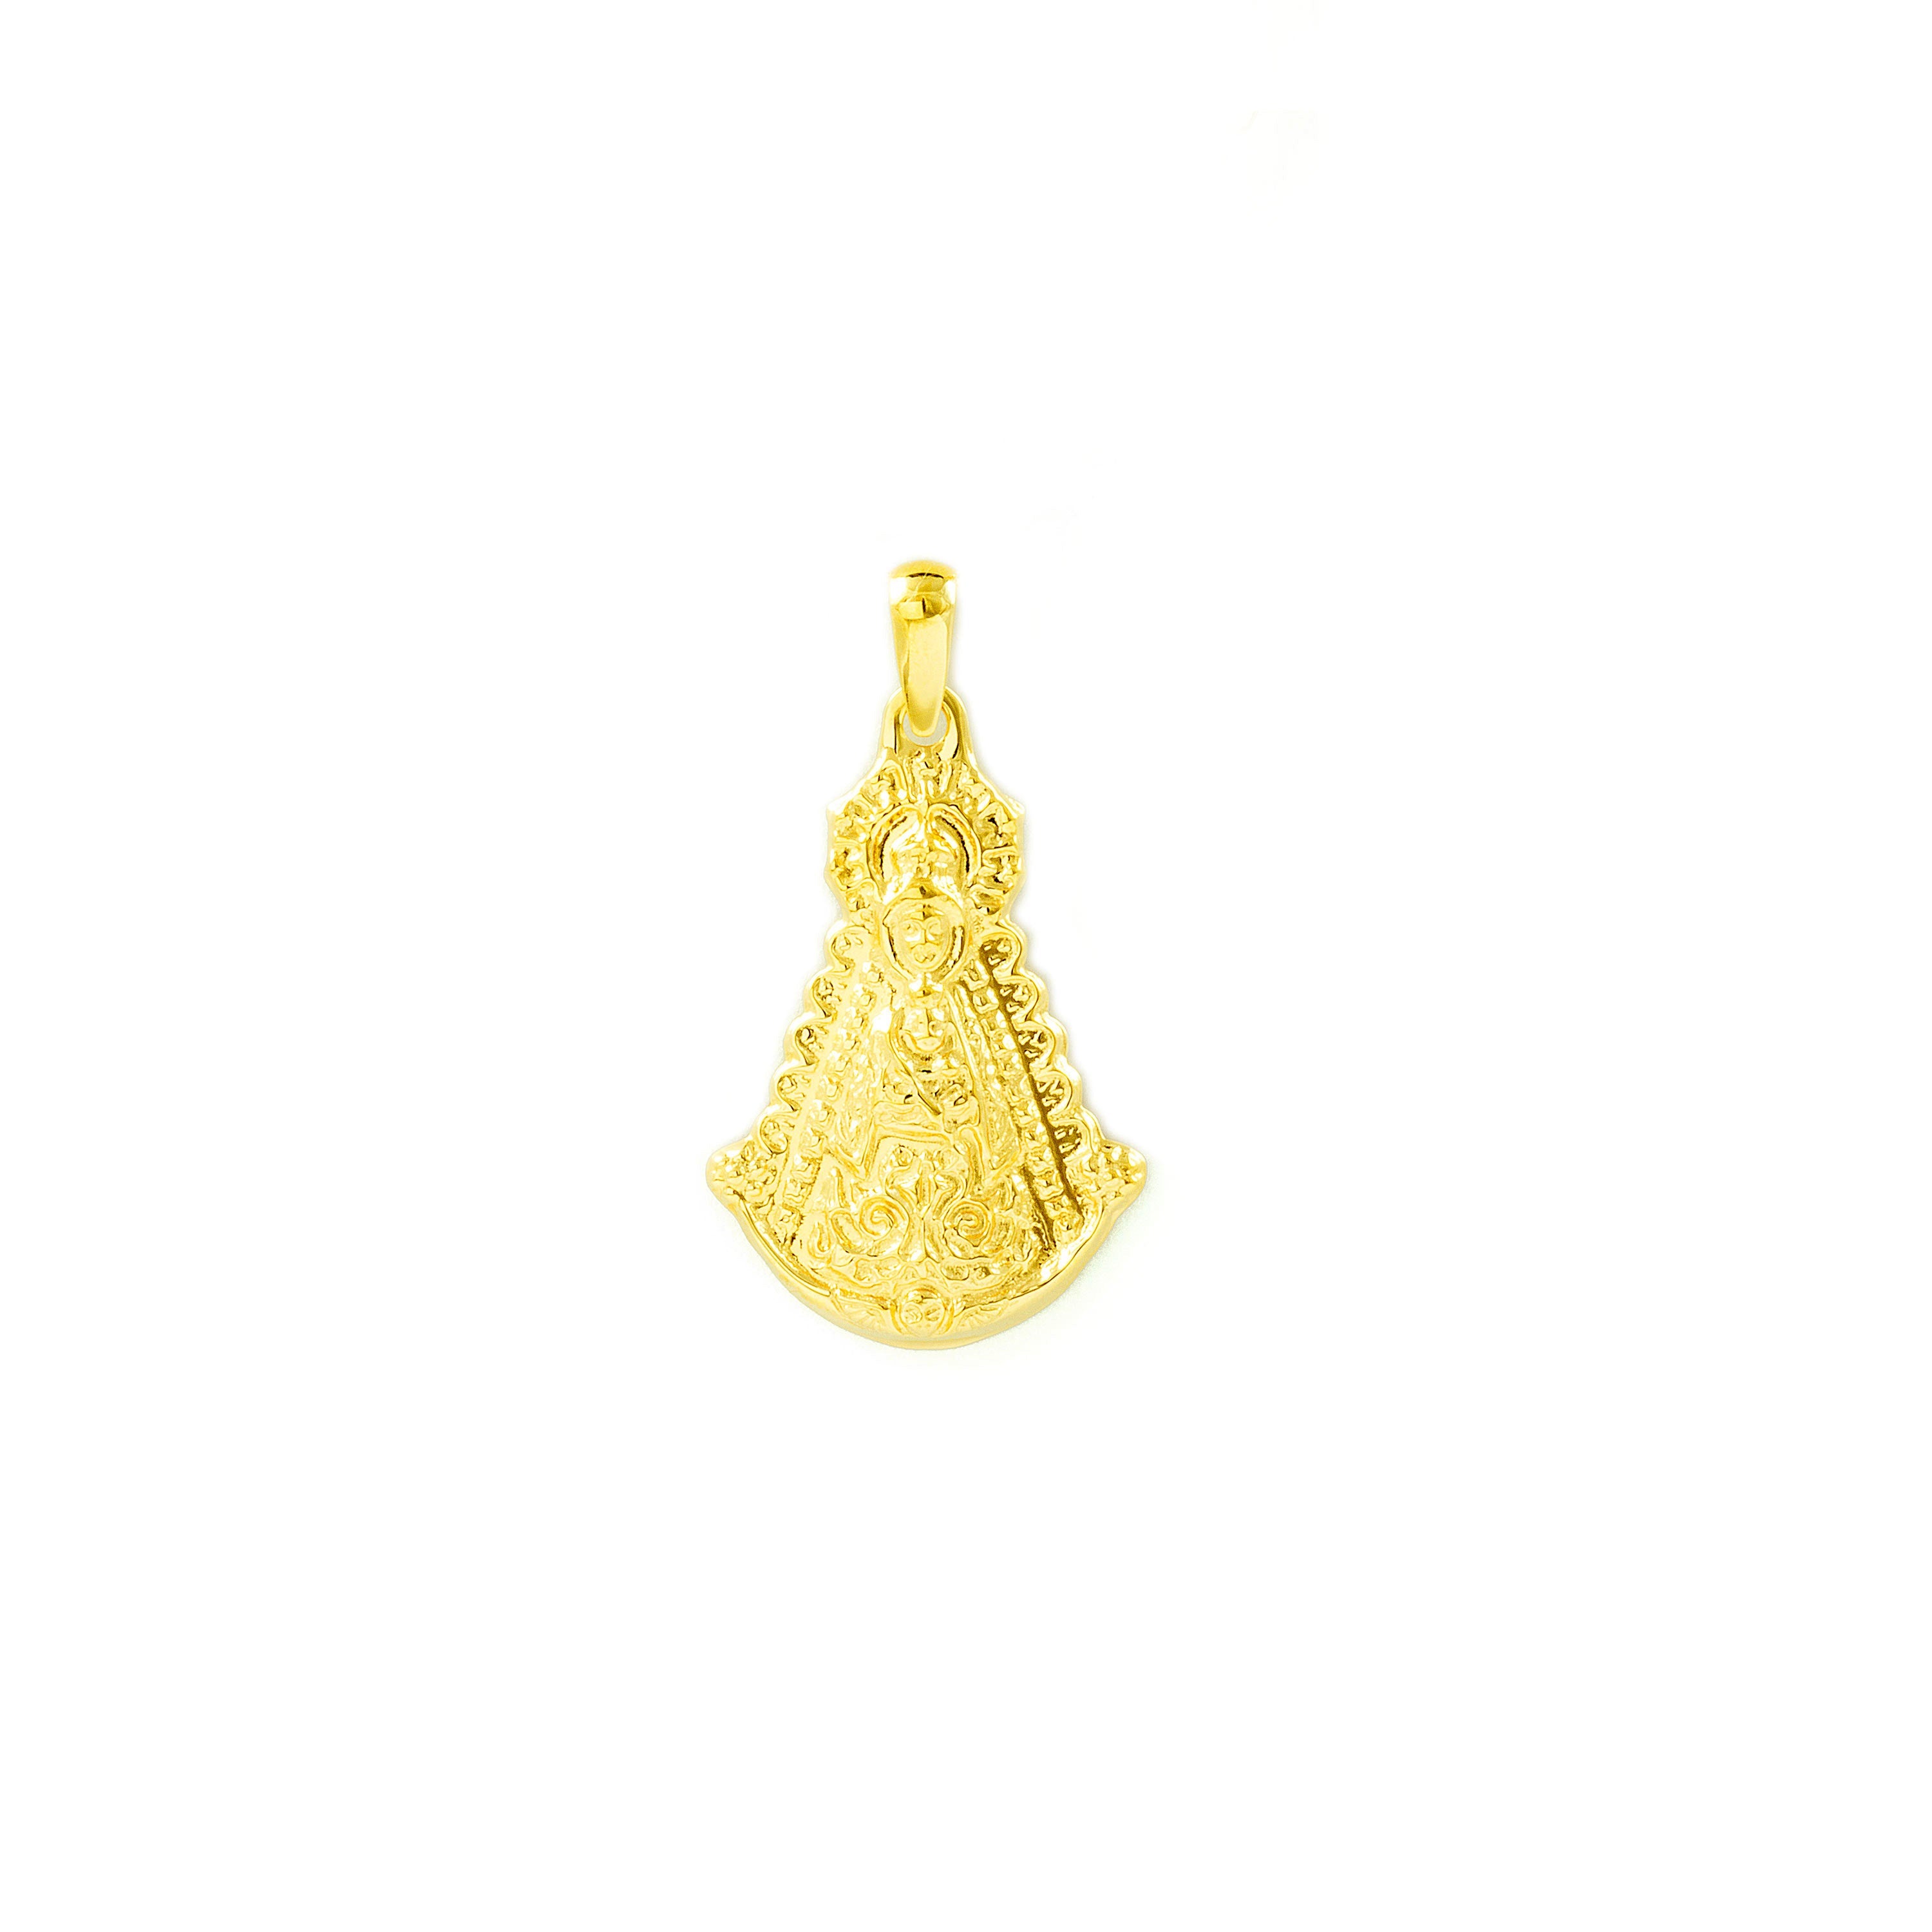 18K Yellow Gold Medal Small Virgen del Rocío Shine 19 x 12 mm